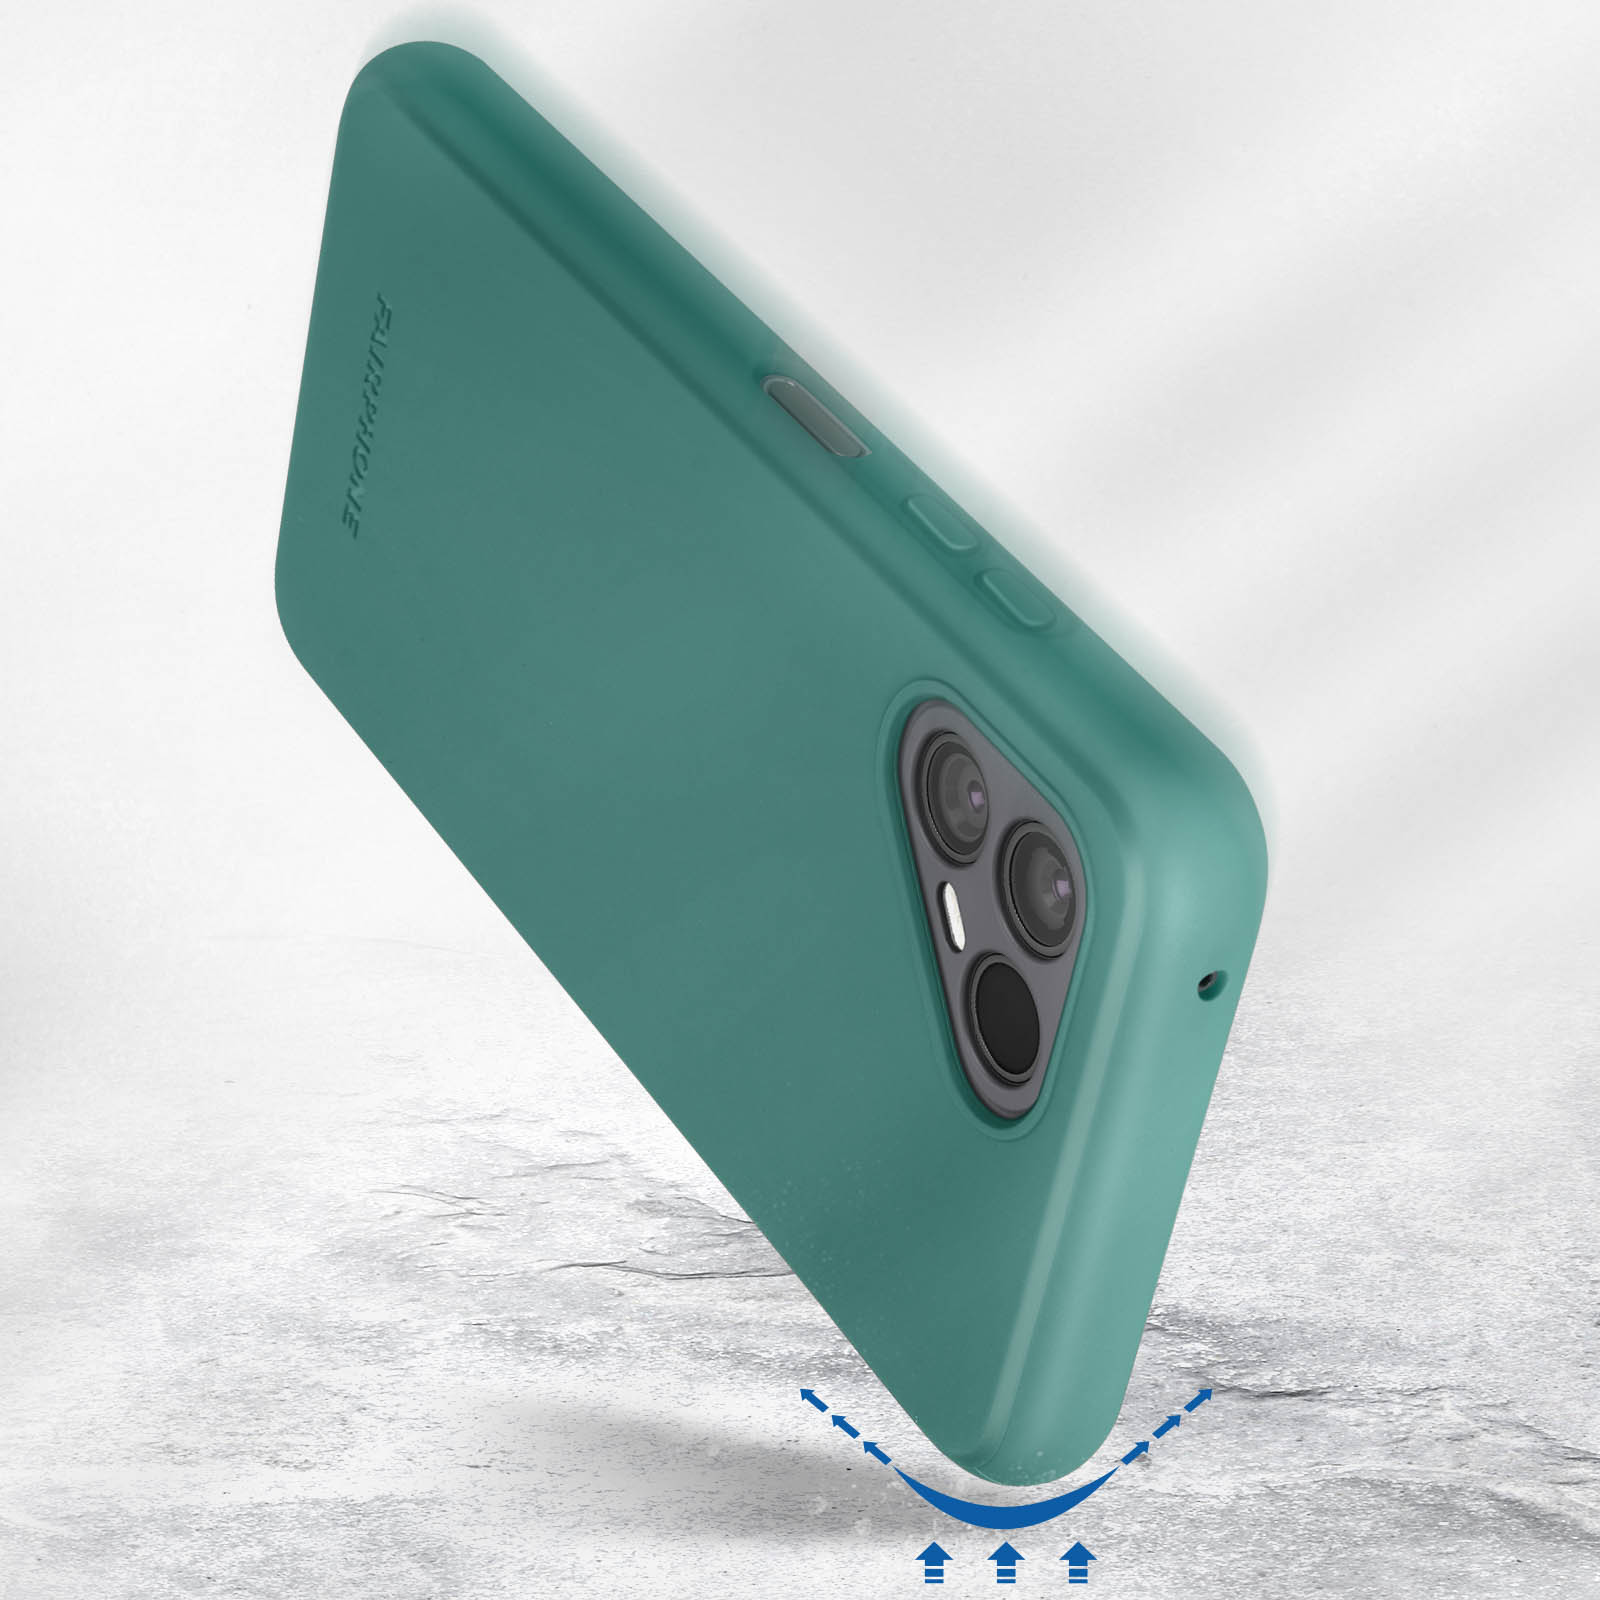 4, FAIRPHONE Green Case, Bumper, Fairphone, Protective Soft Fairphone